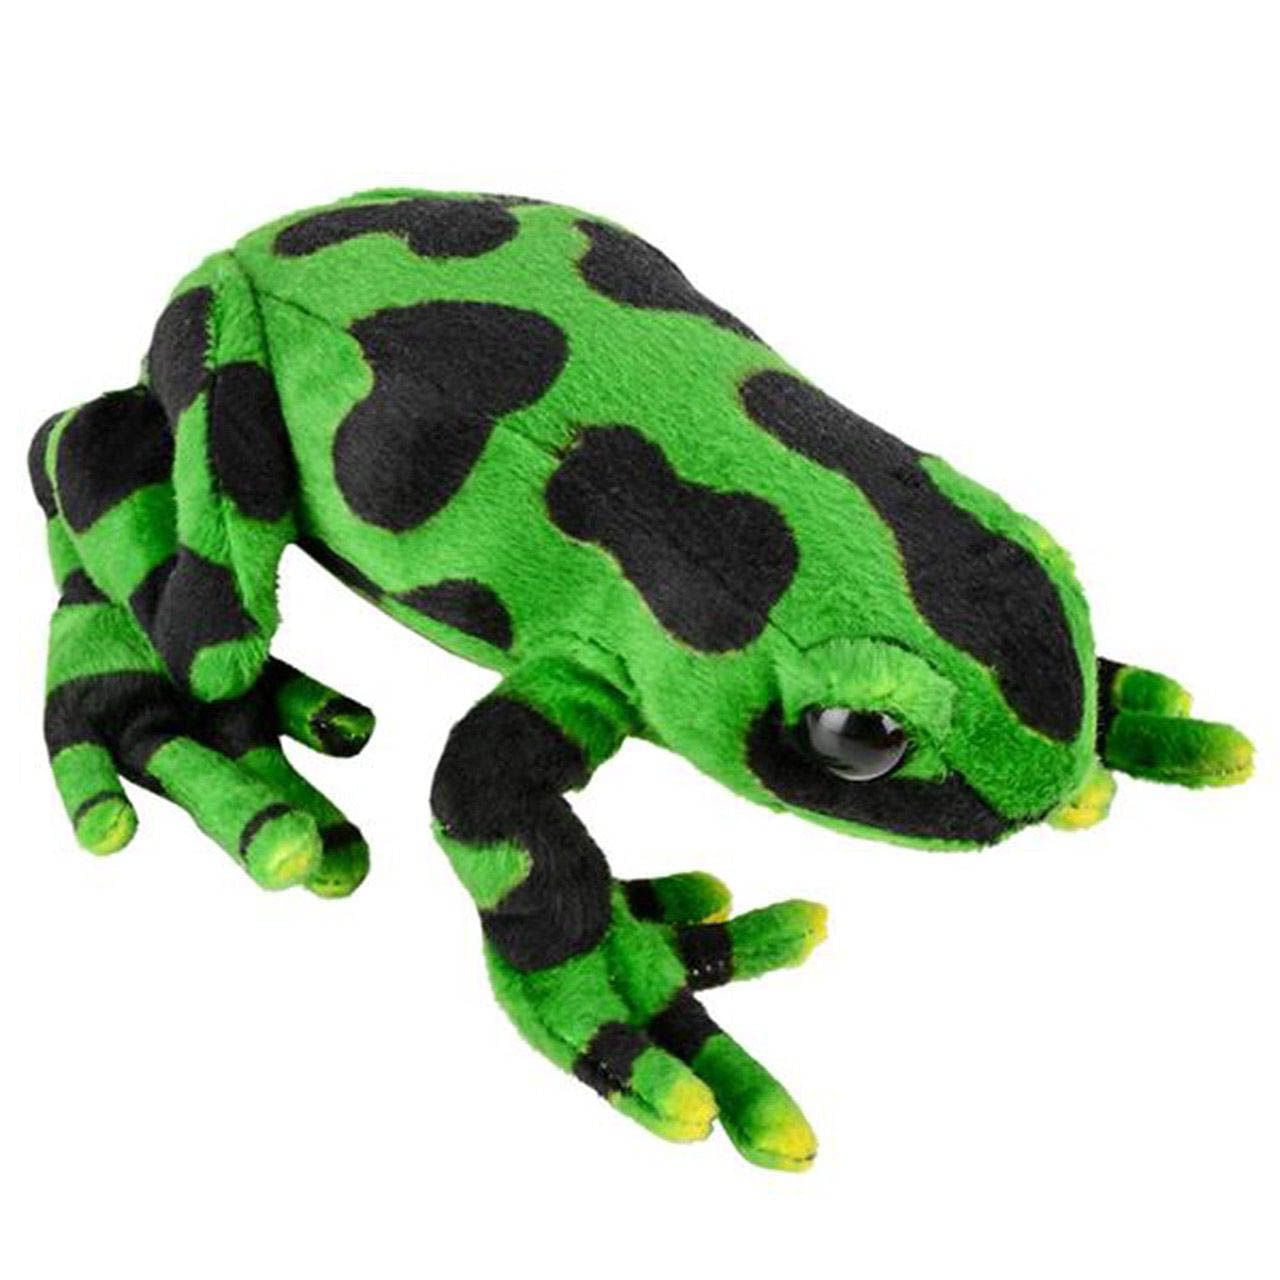 small stuffed frog